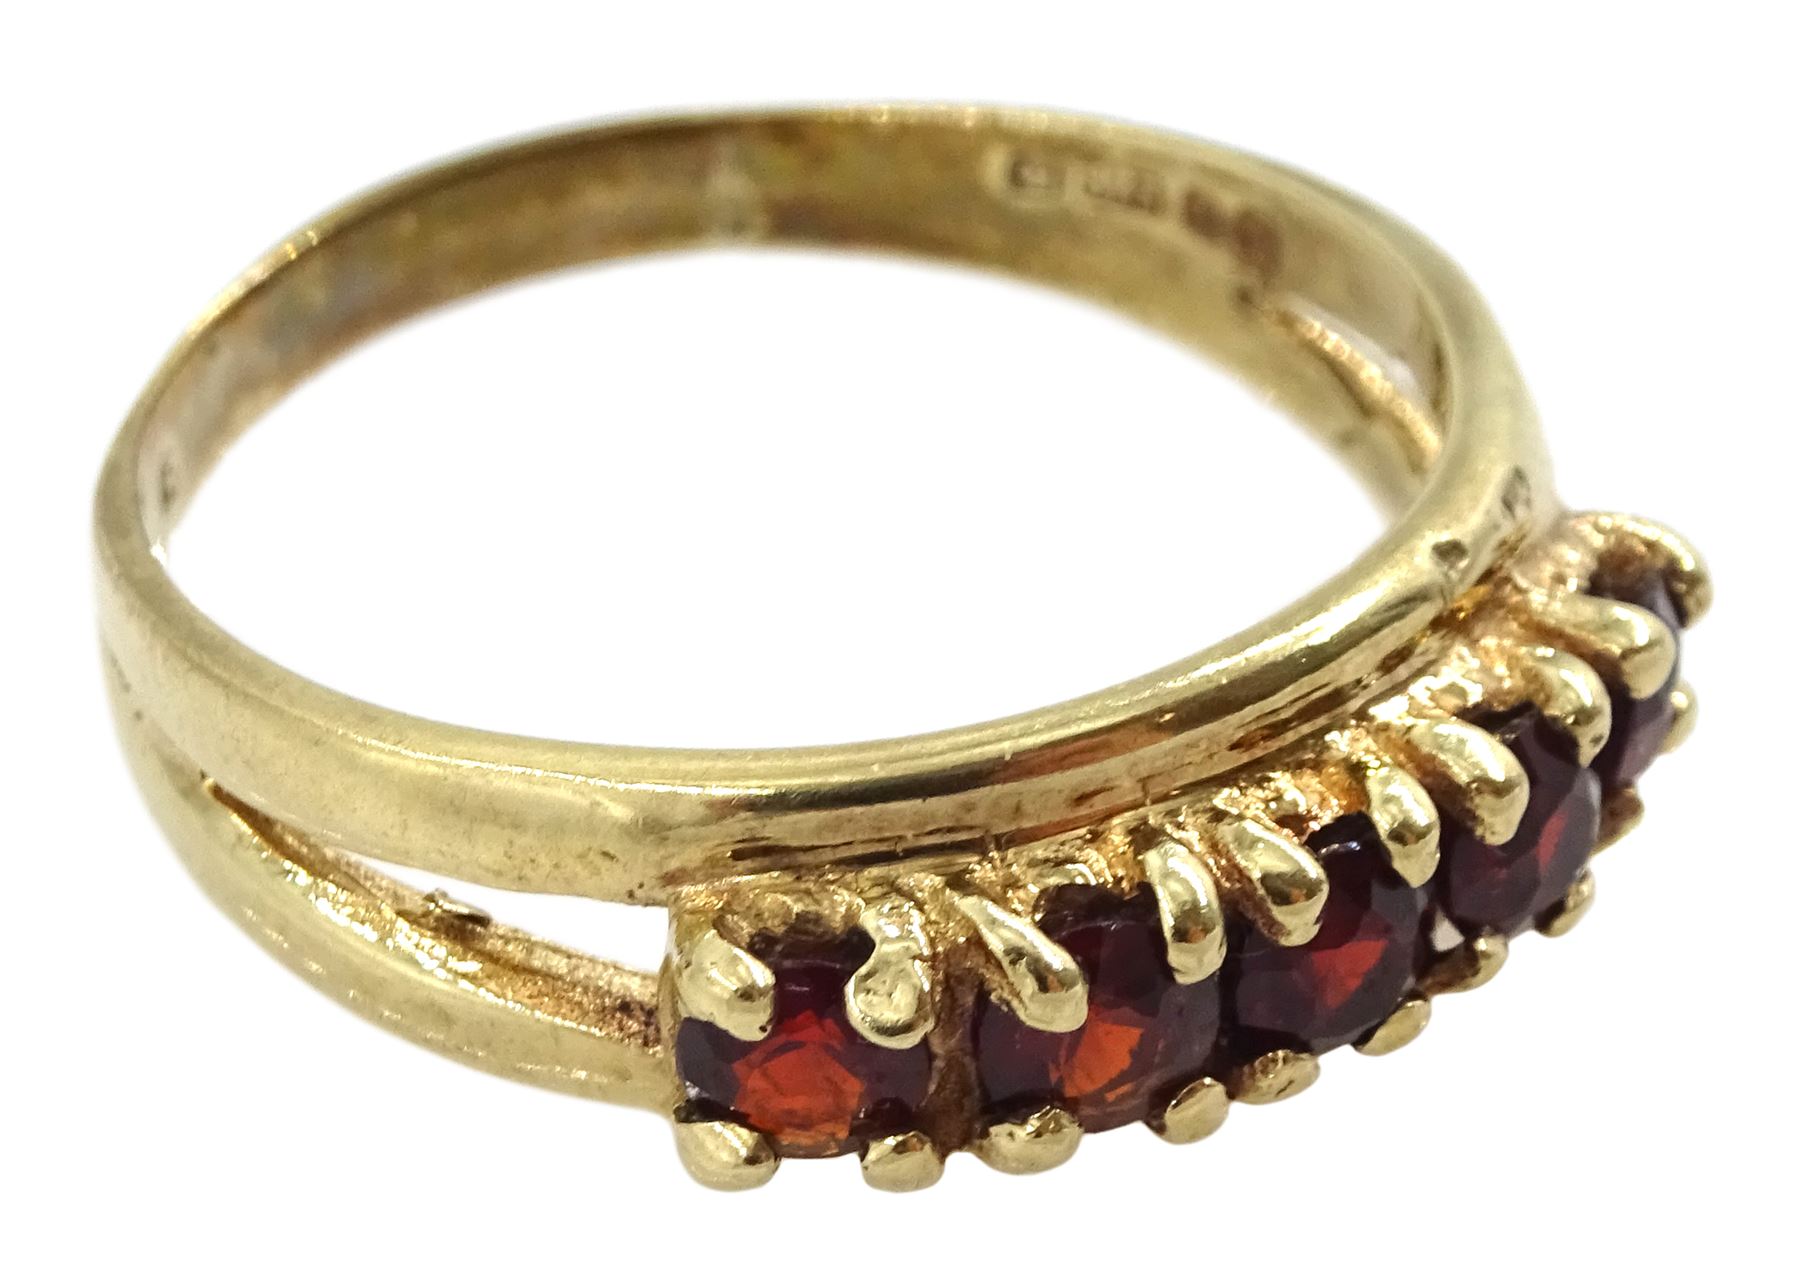 9ct gold five stone garnet ring with split design shank - Image 3 of 4